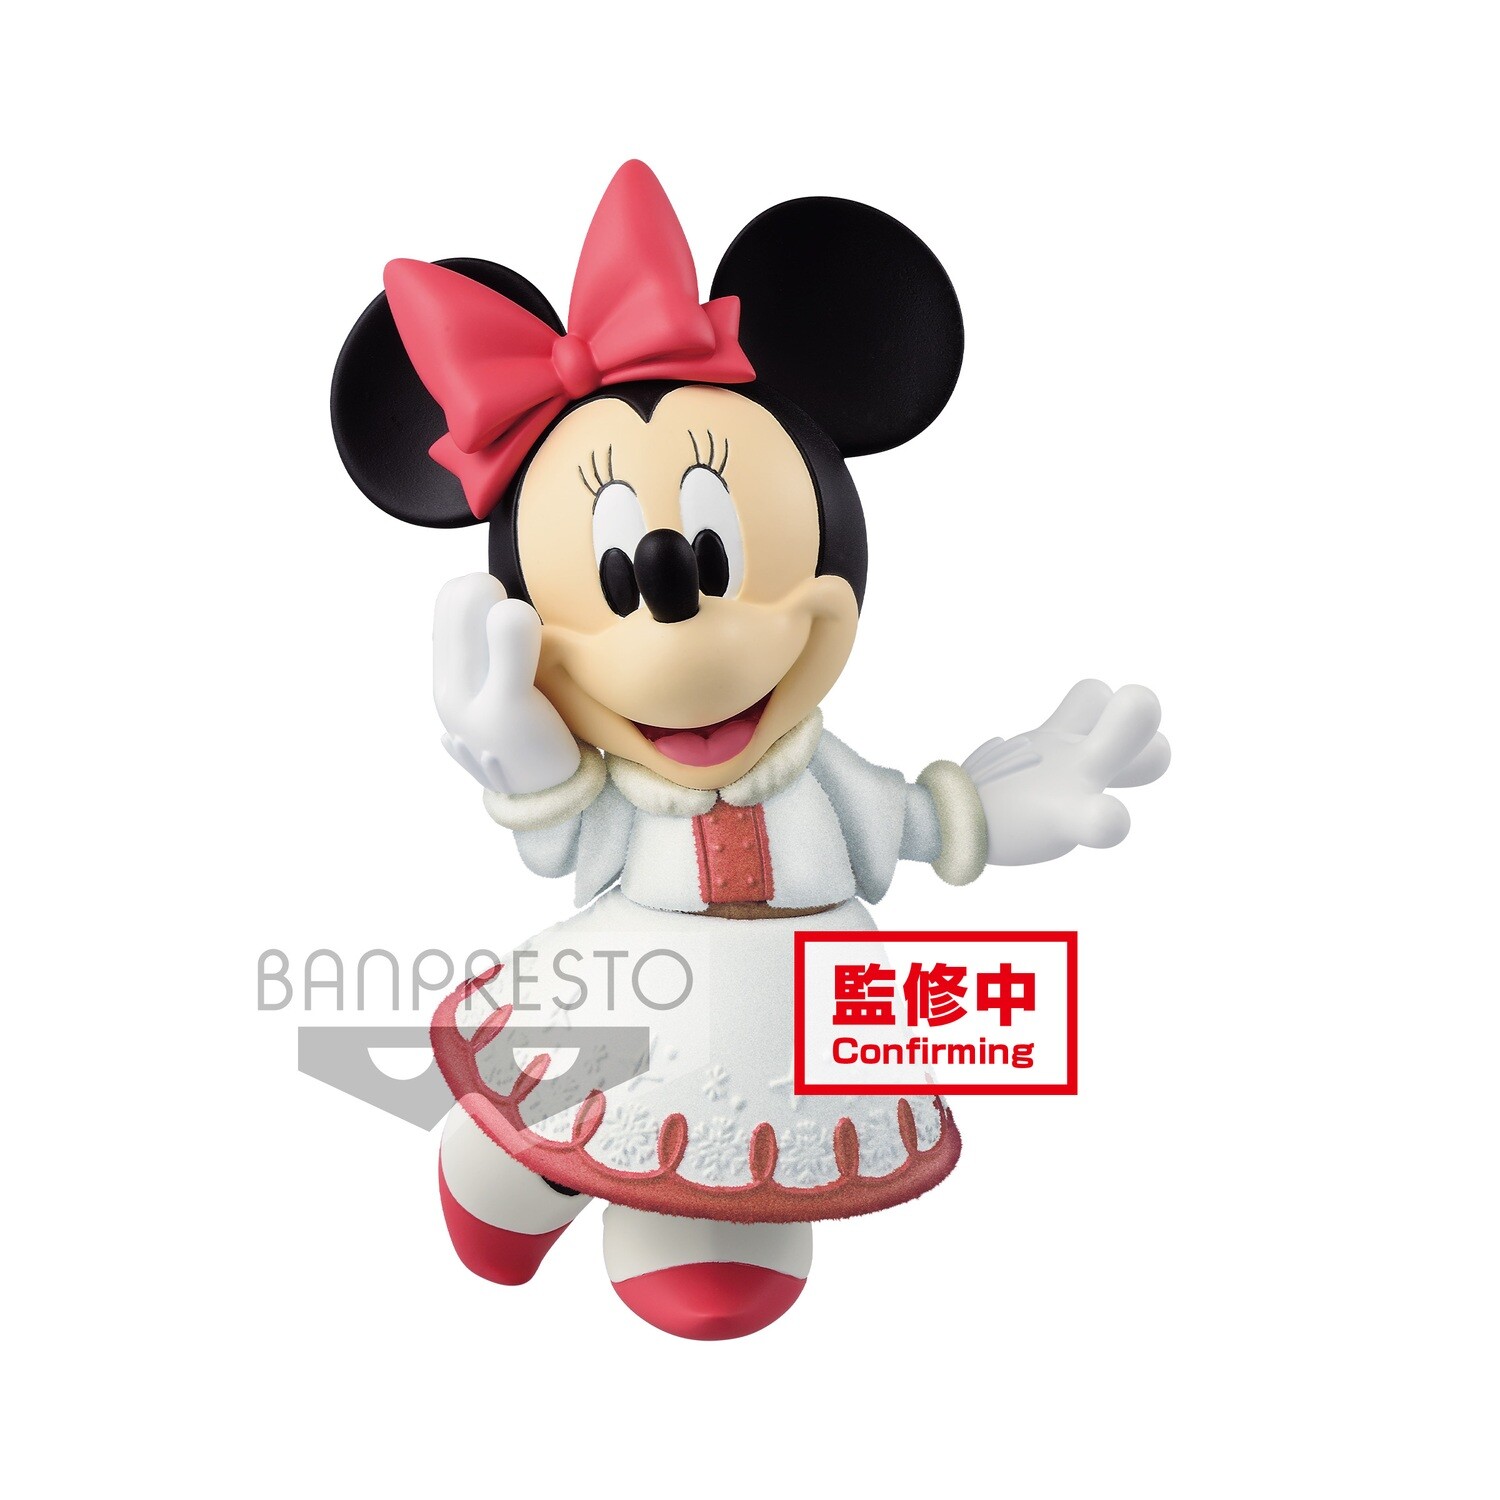 Banpresto Disney Character Fluffy Puffy Minnie Mouse